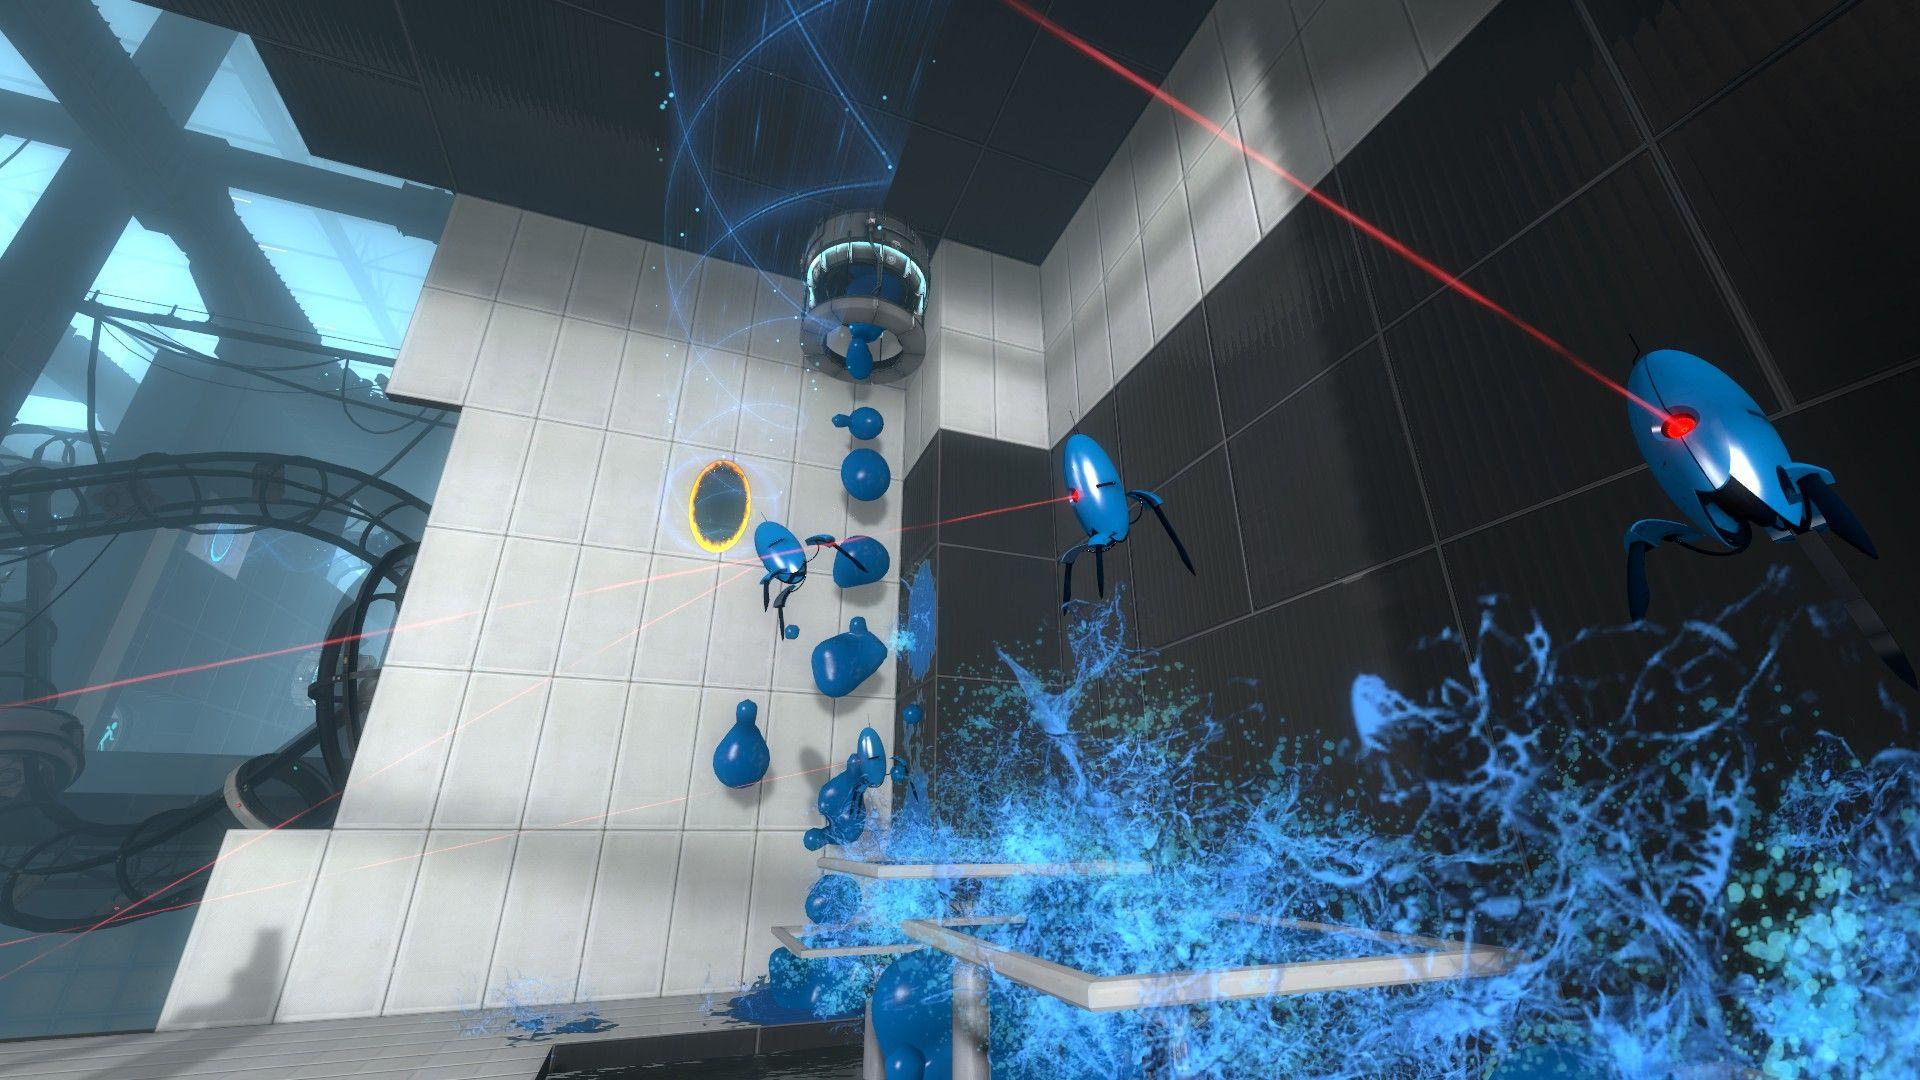 Screenshot №12 from game Portal 2